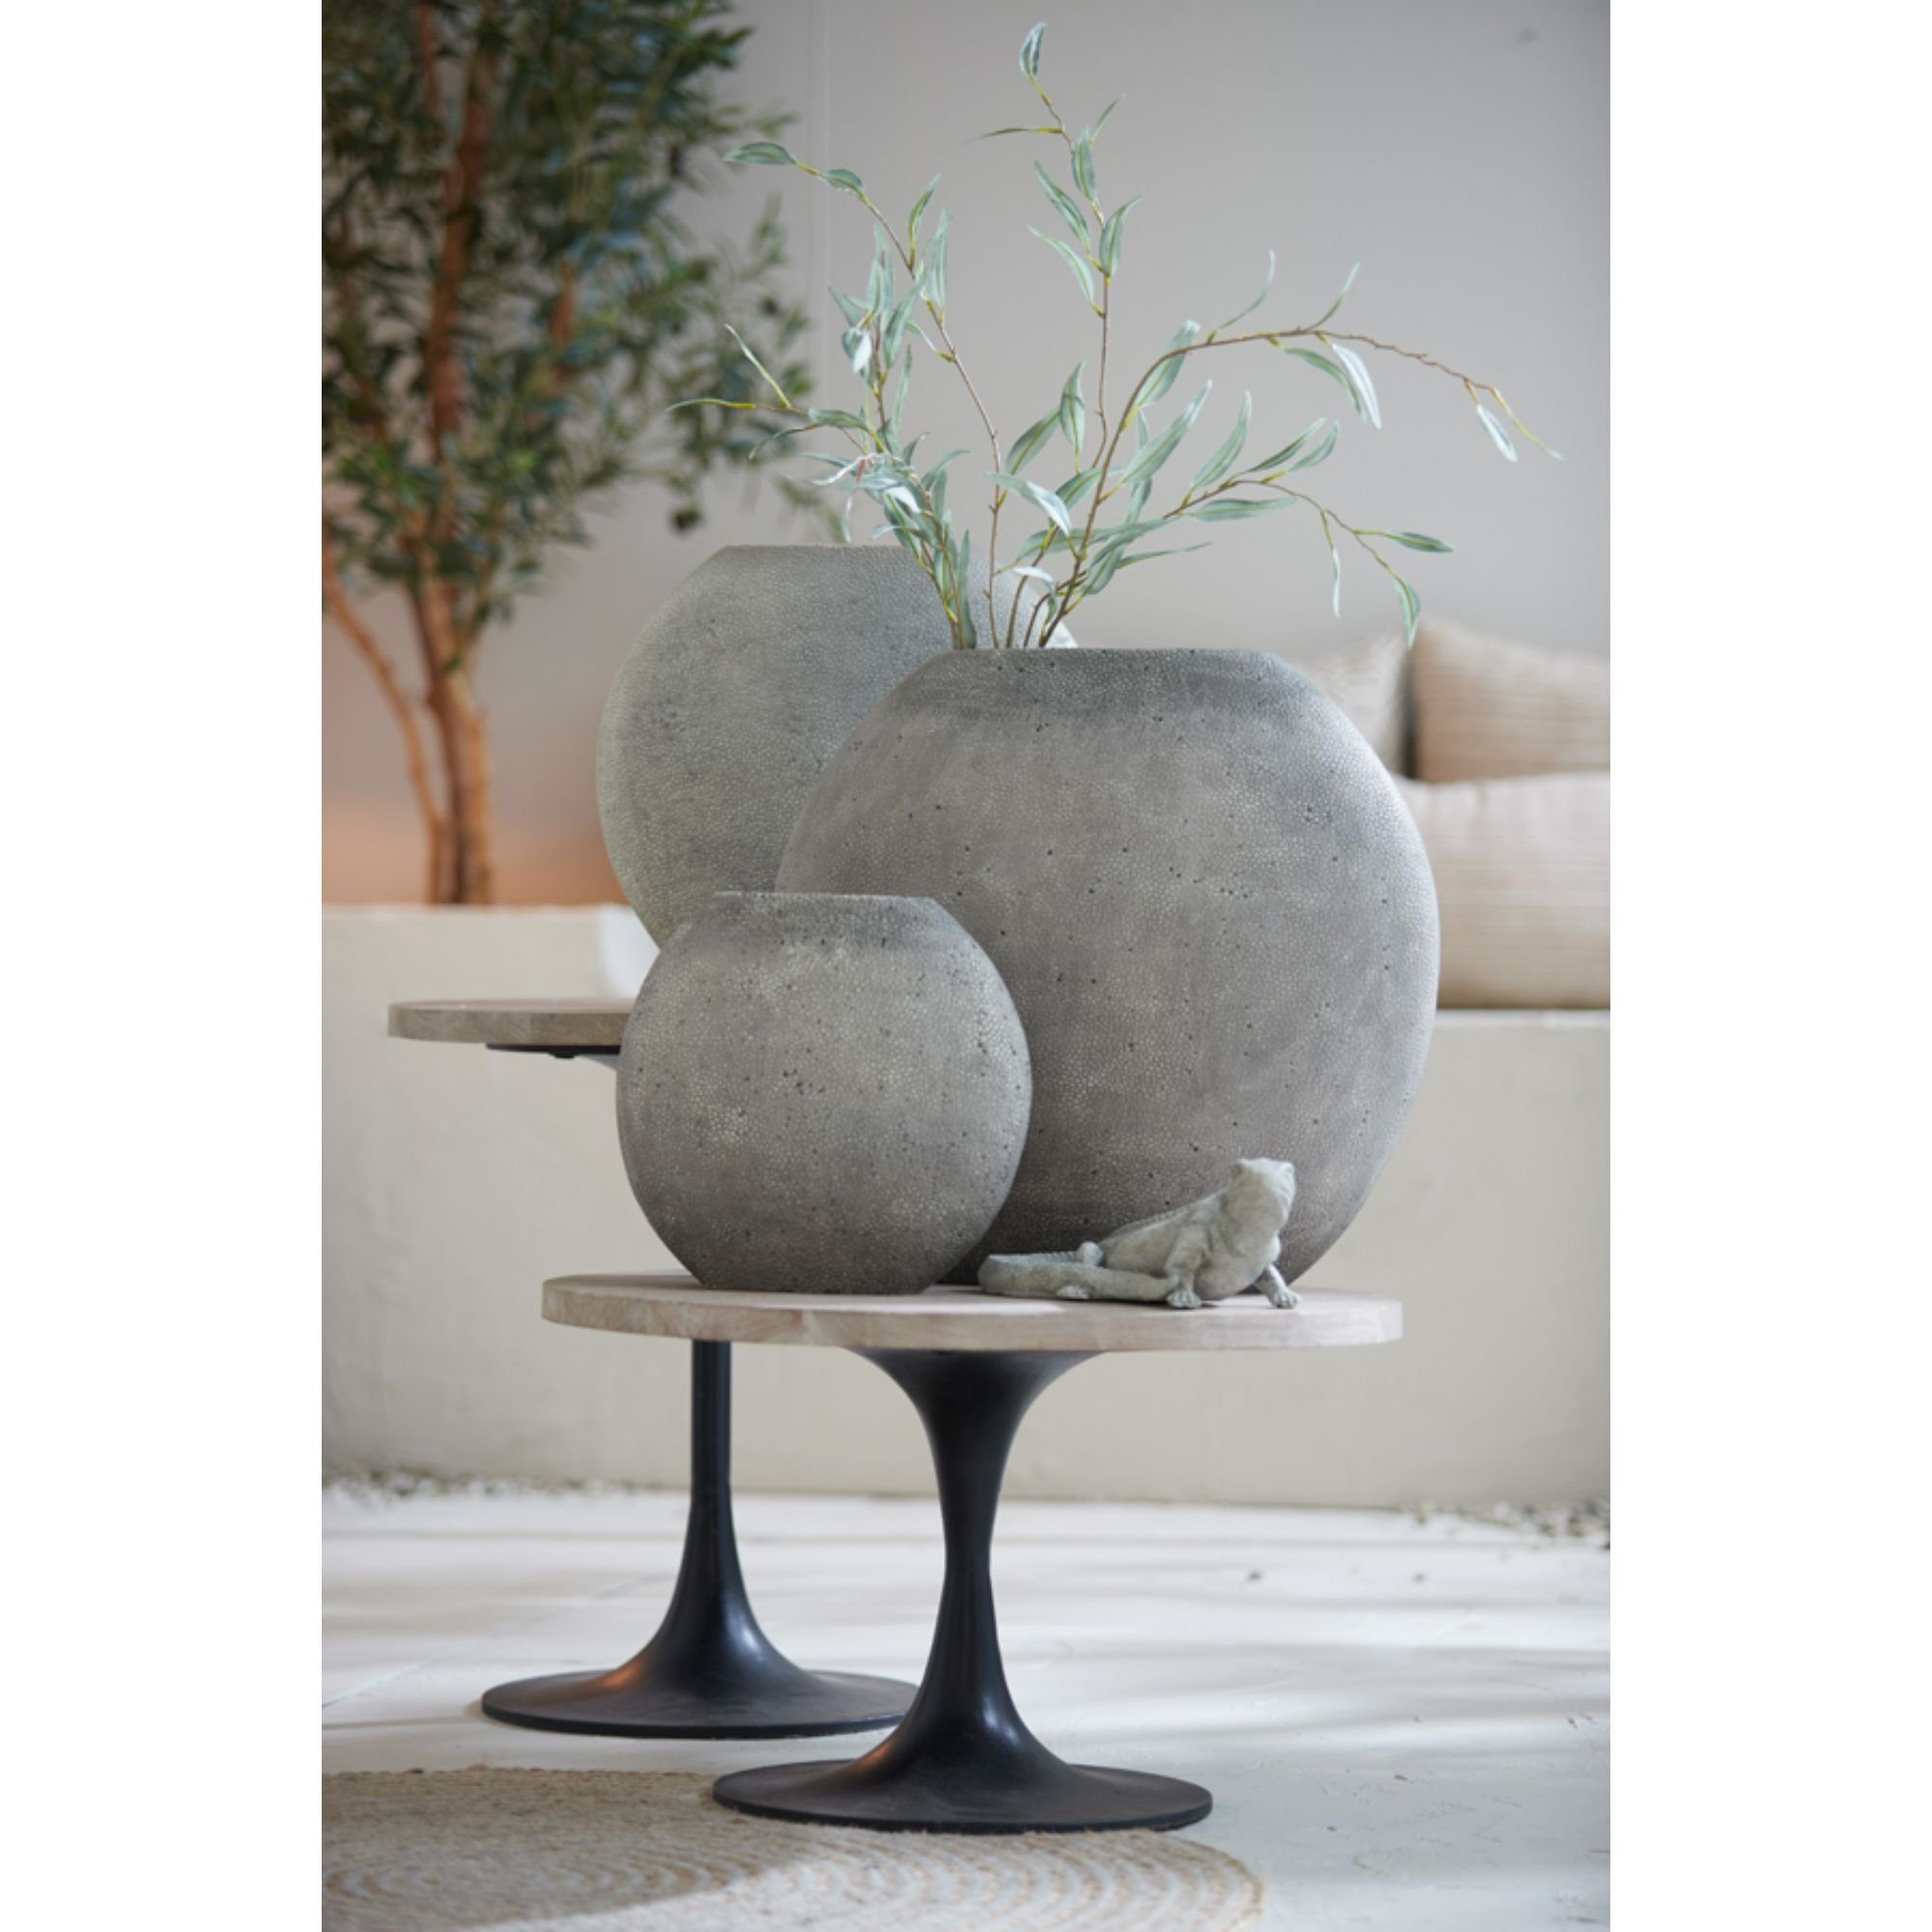 Light & 40x14x36cm Rayskin Deko - Dekovase Living Vase - Grau